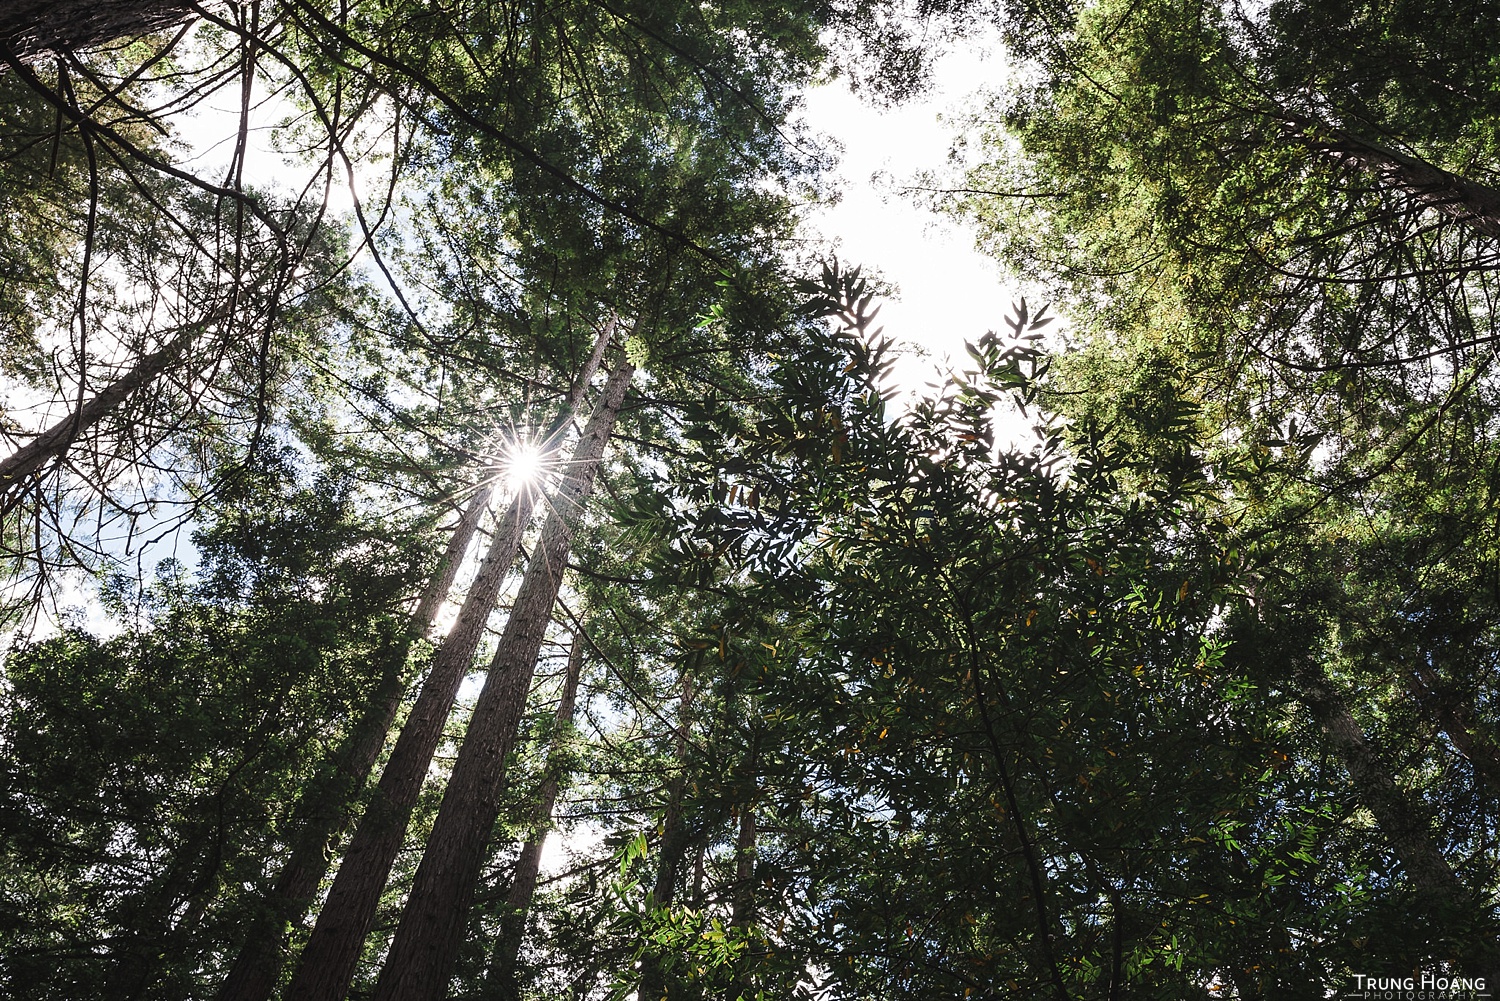 Sunstar through the Redwoods